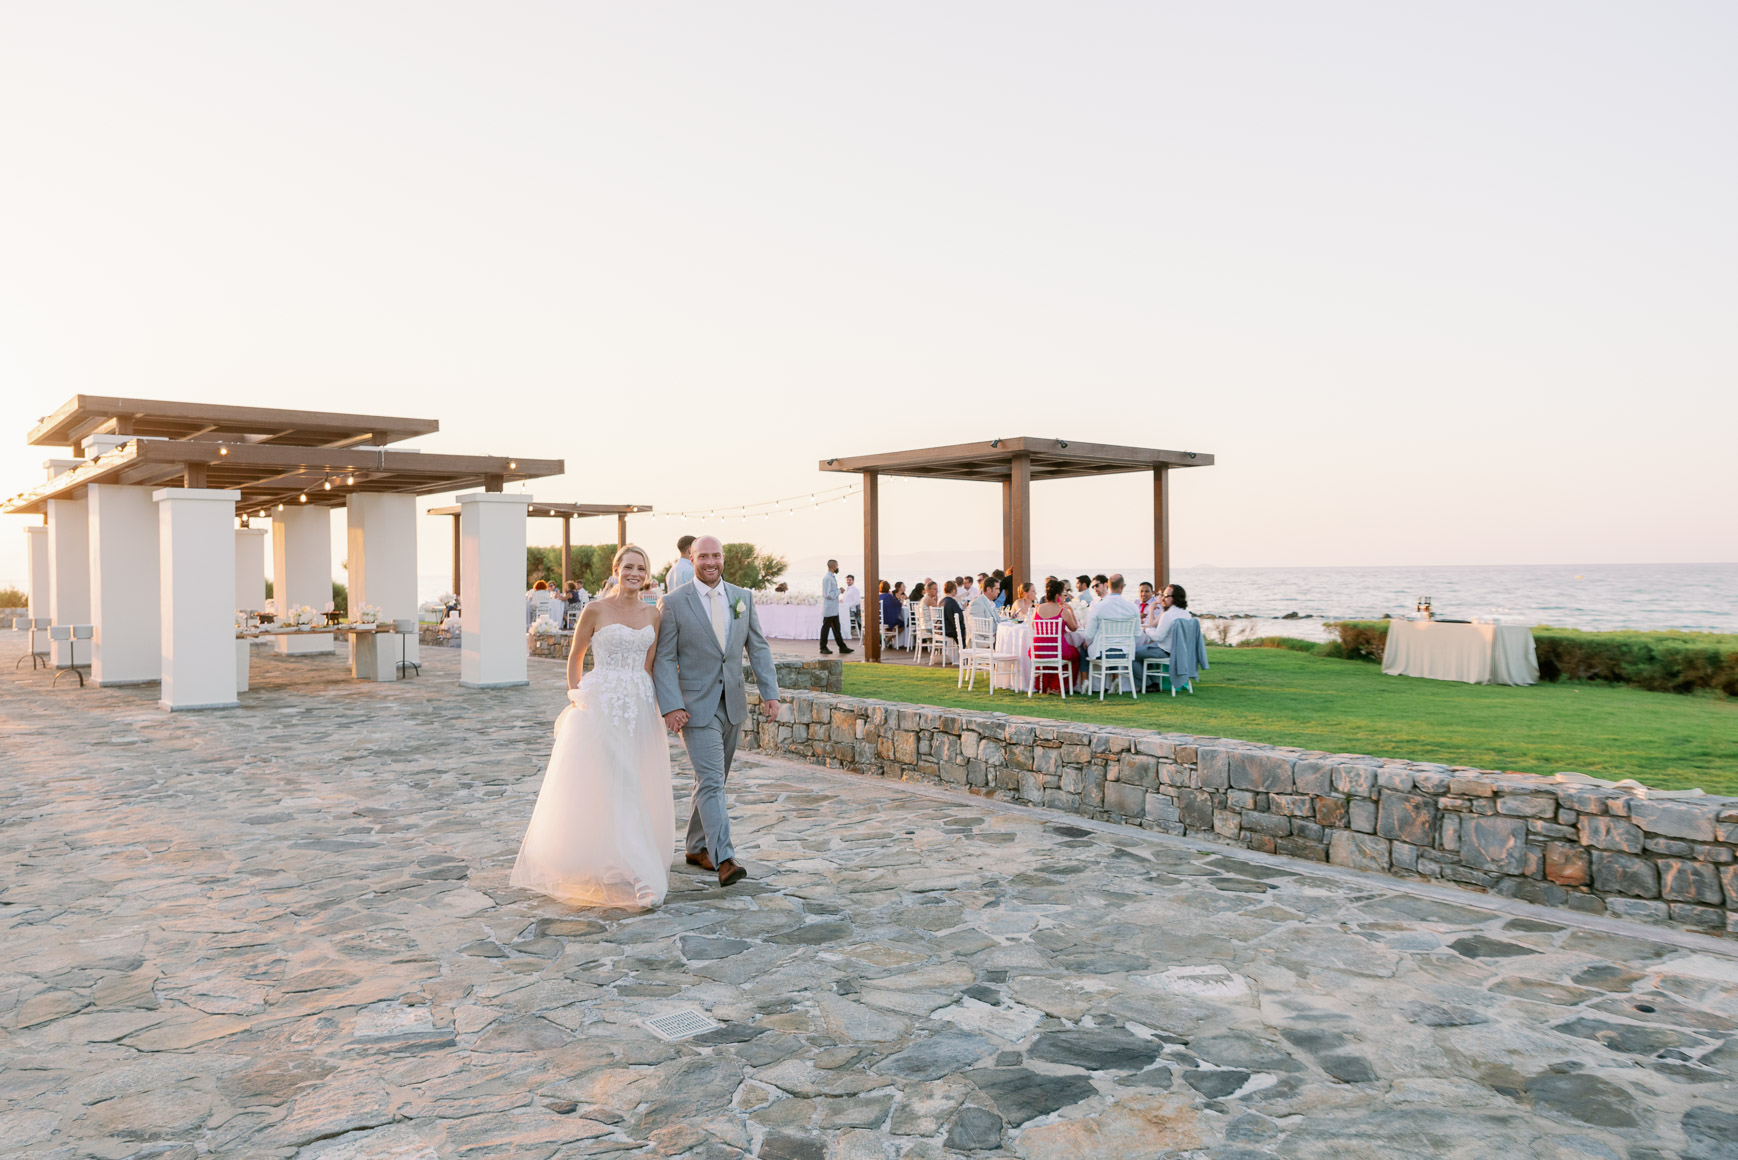 Wedding photographer in Crete - Photographer Crete - Photographer in Crete - Crete photography - Wedding in Crete - Destination wedding in Greece - Greek islands wedding